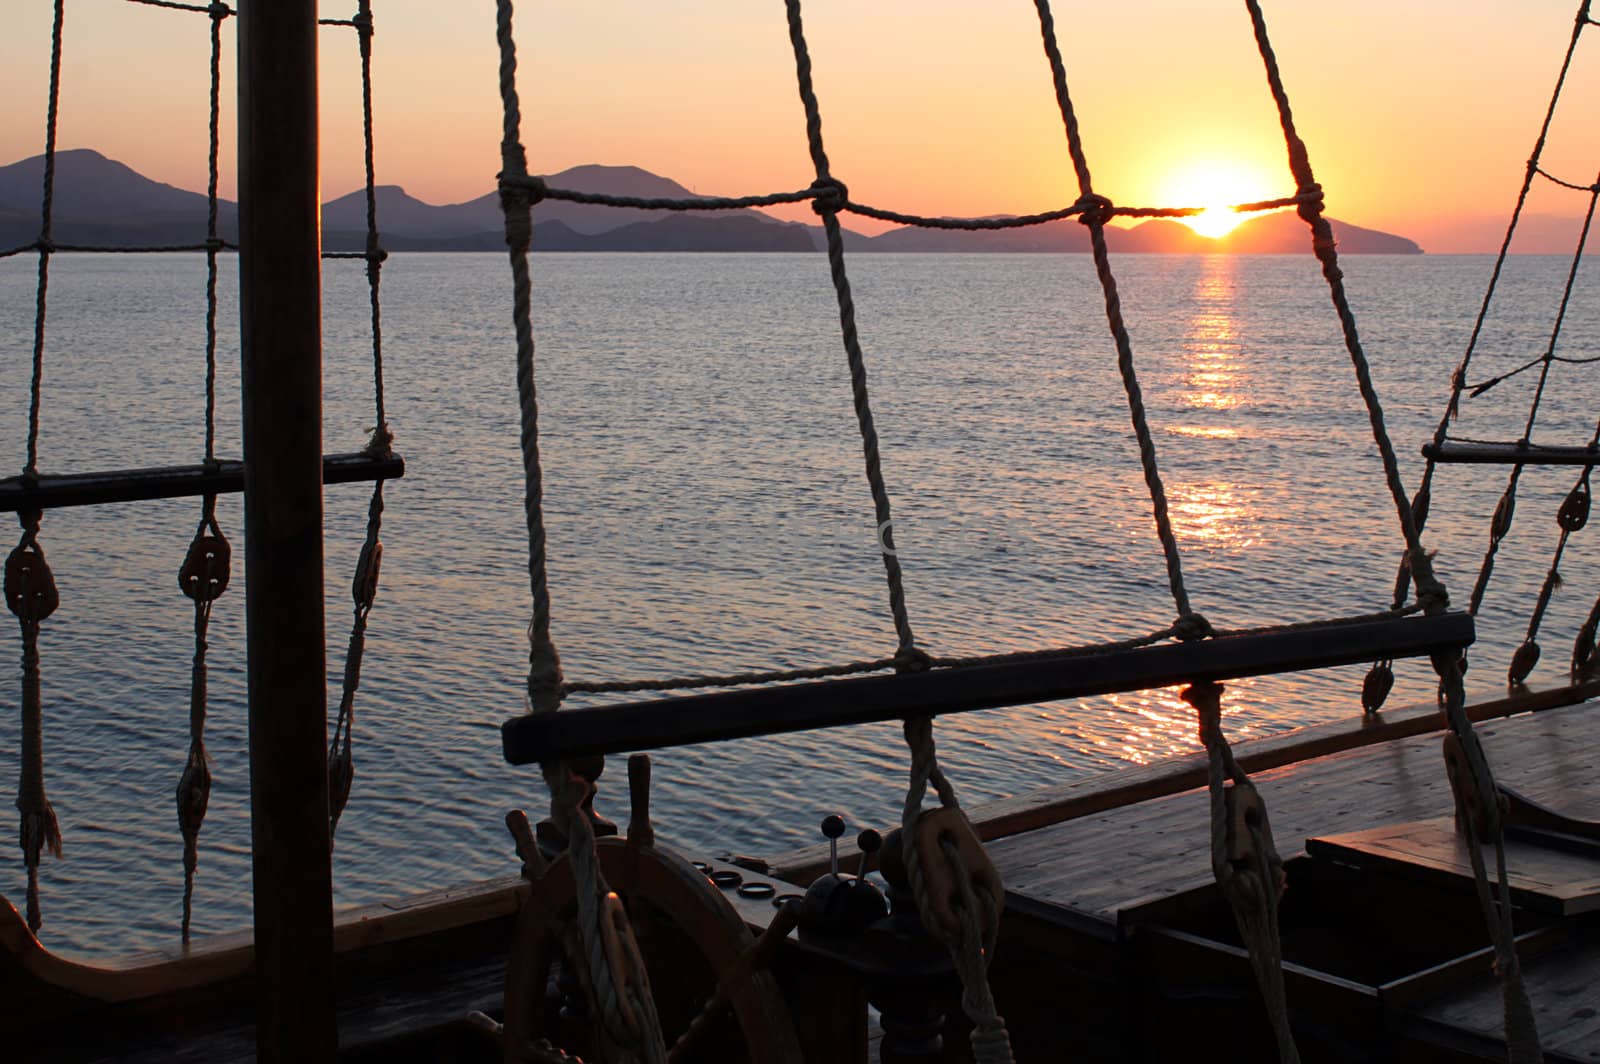 rigging of ship over sunrise